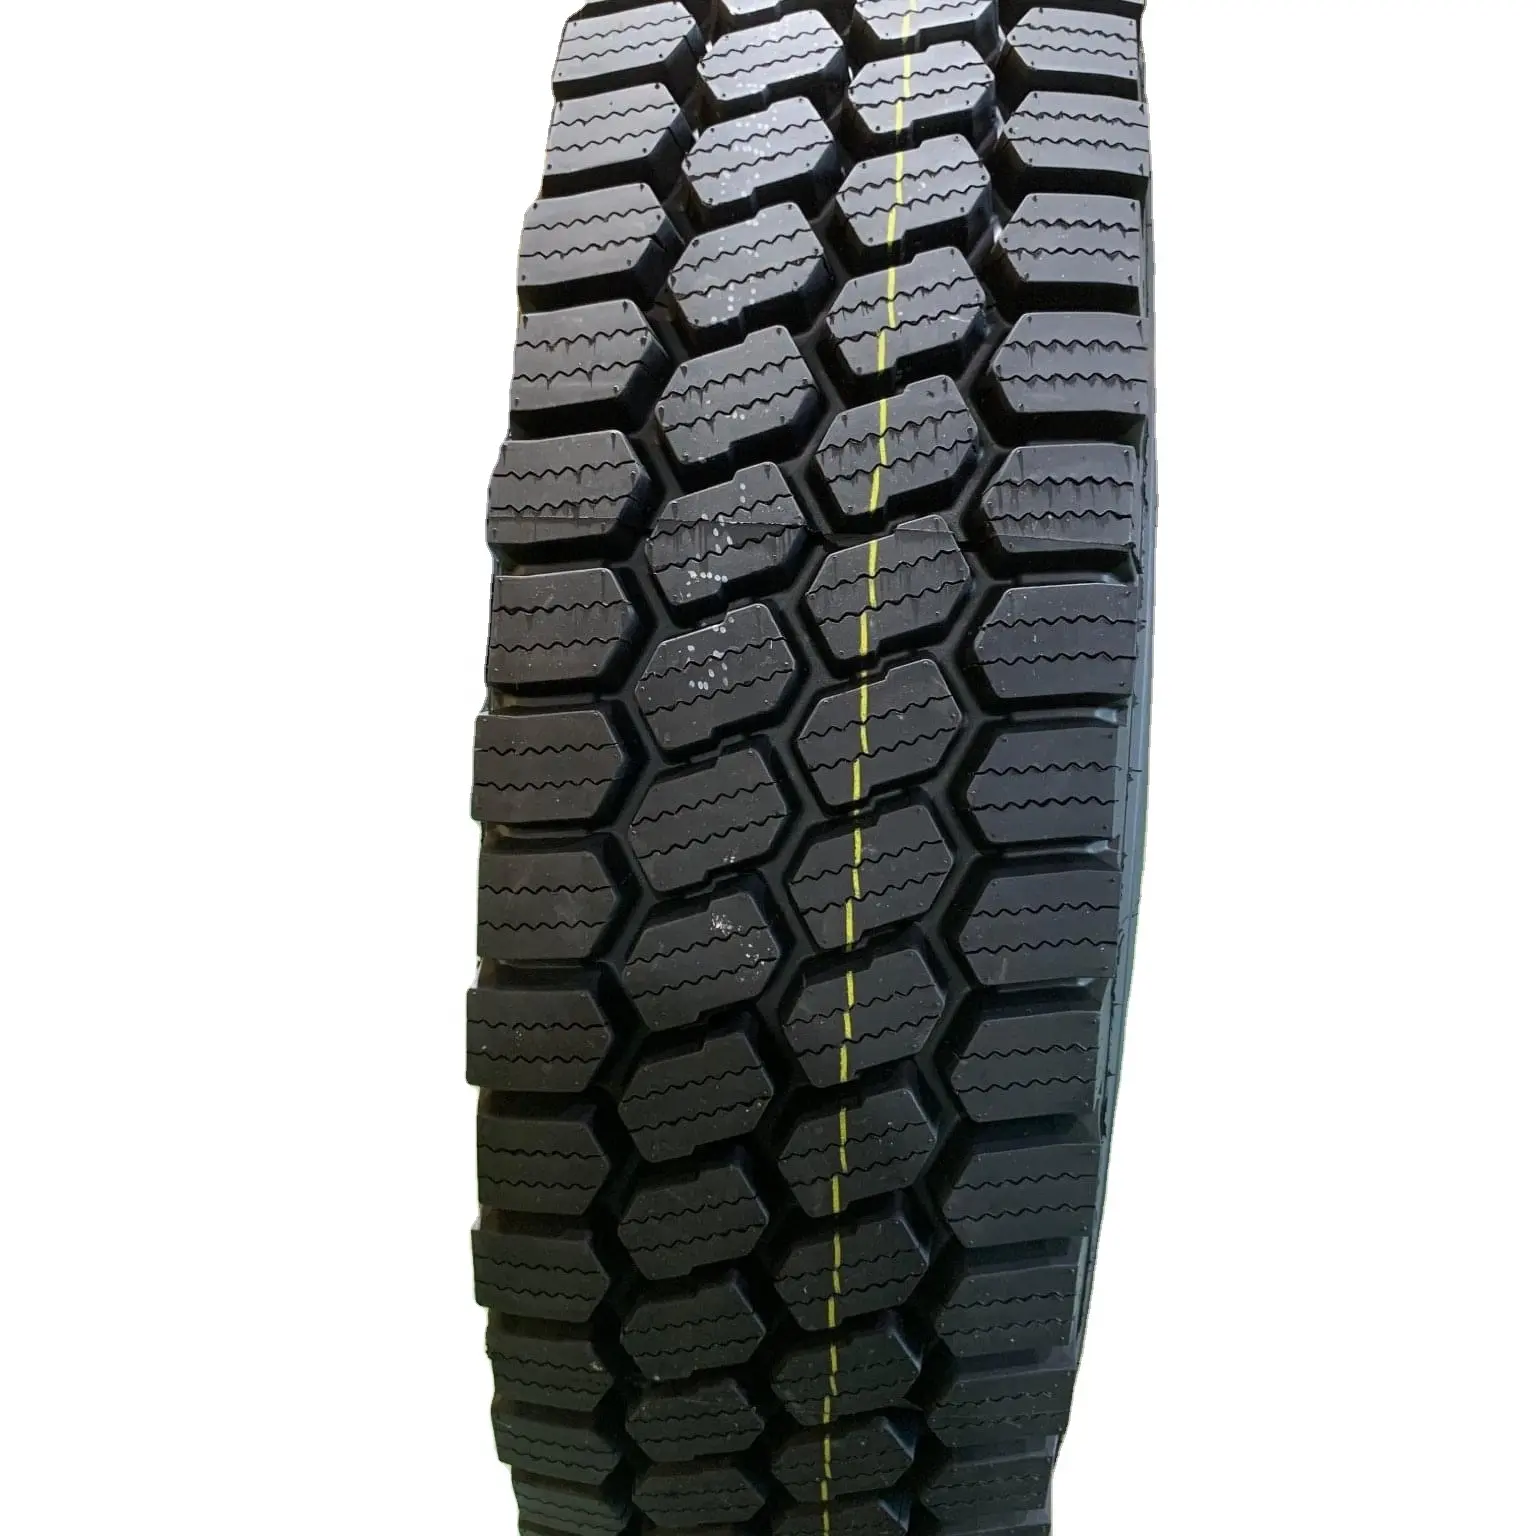 295/75/22.5 11 r22.5 11 r24.5 ruote e pneumatici commerciali pneumatici per autocarri pneumatici commerciali